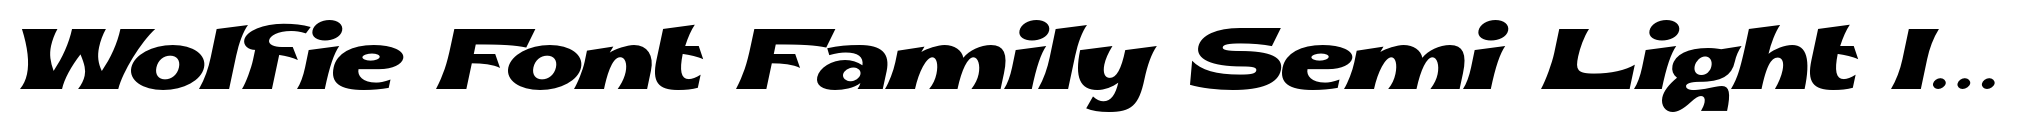 Wolfie Font Family Semi Light Italic image